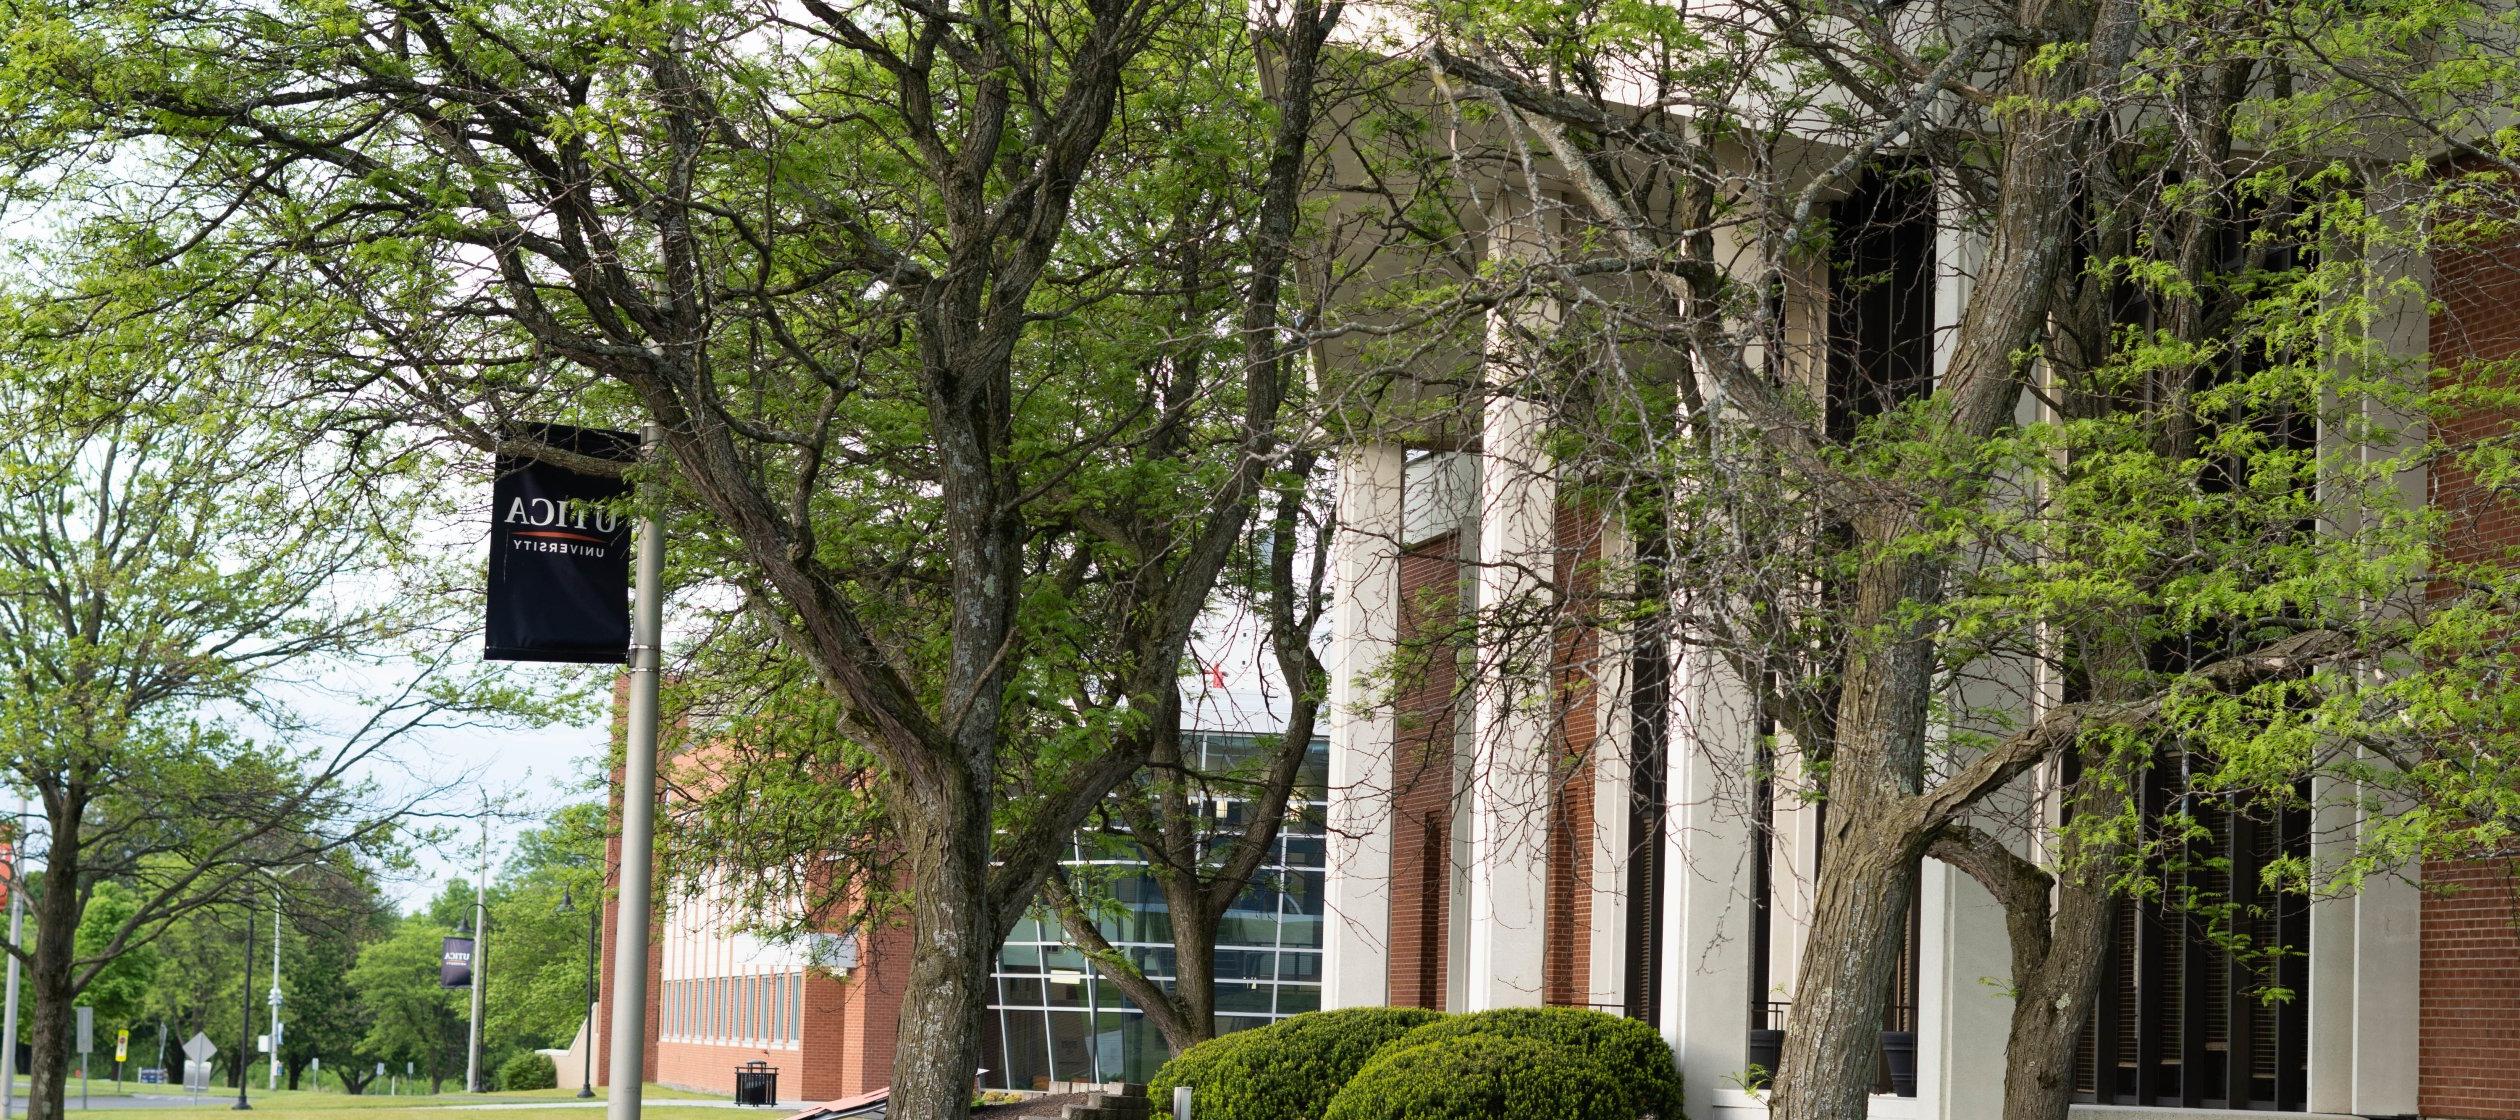 Two trees, full of green leaves, 在一个温暖的日子里，利记sbo的横幅矗立在甘尼特图书馆前，背后是科学中心.